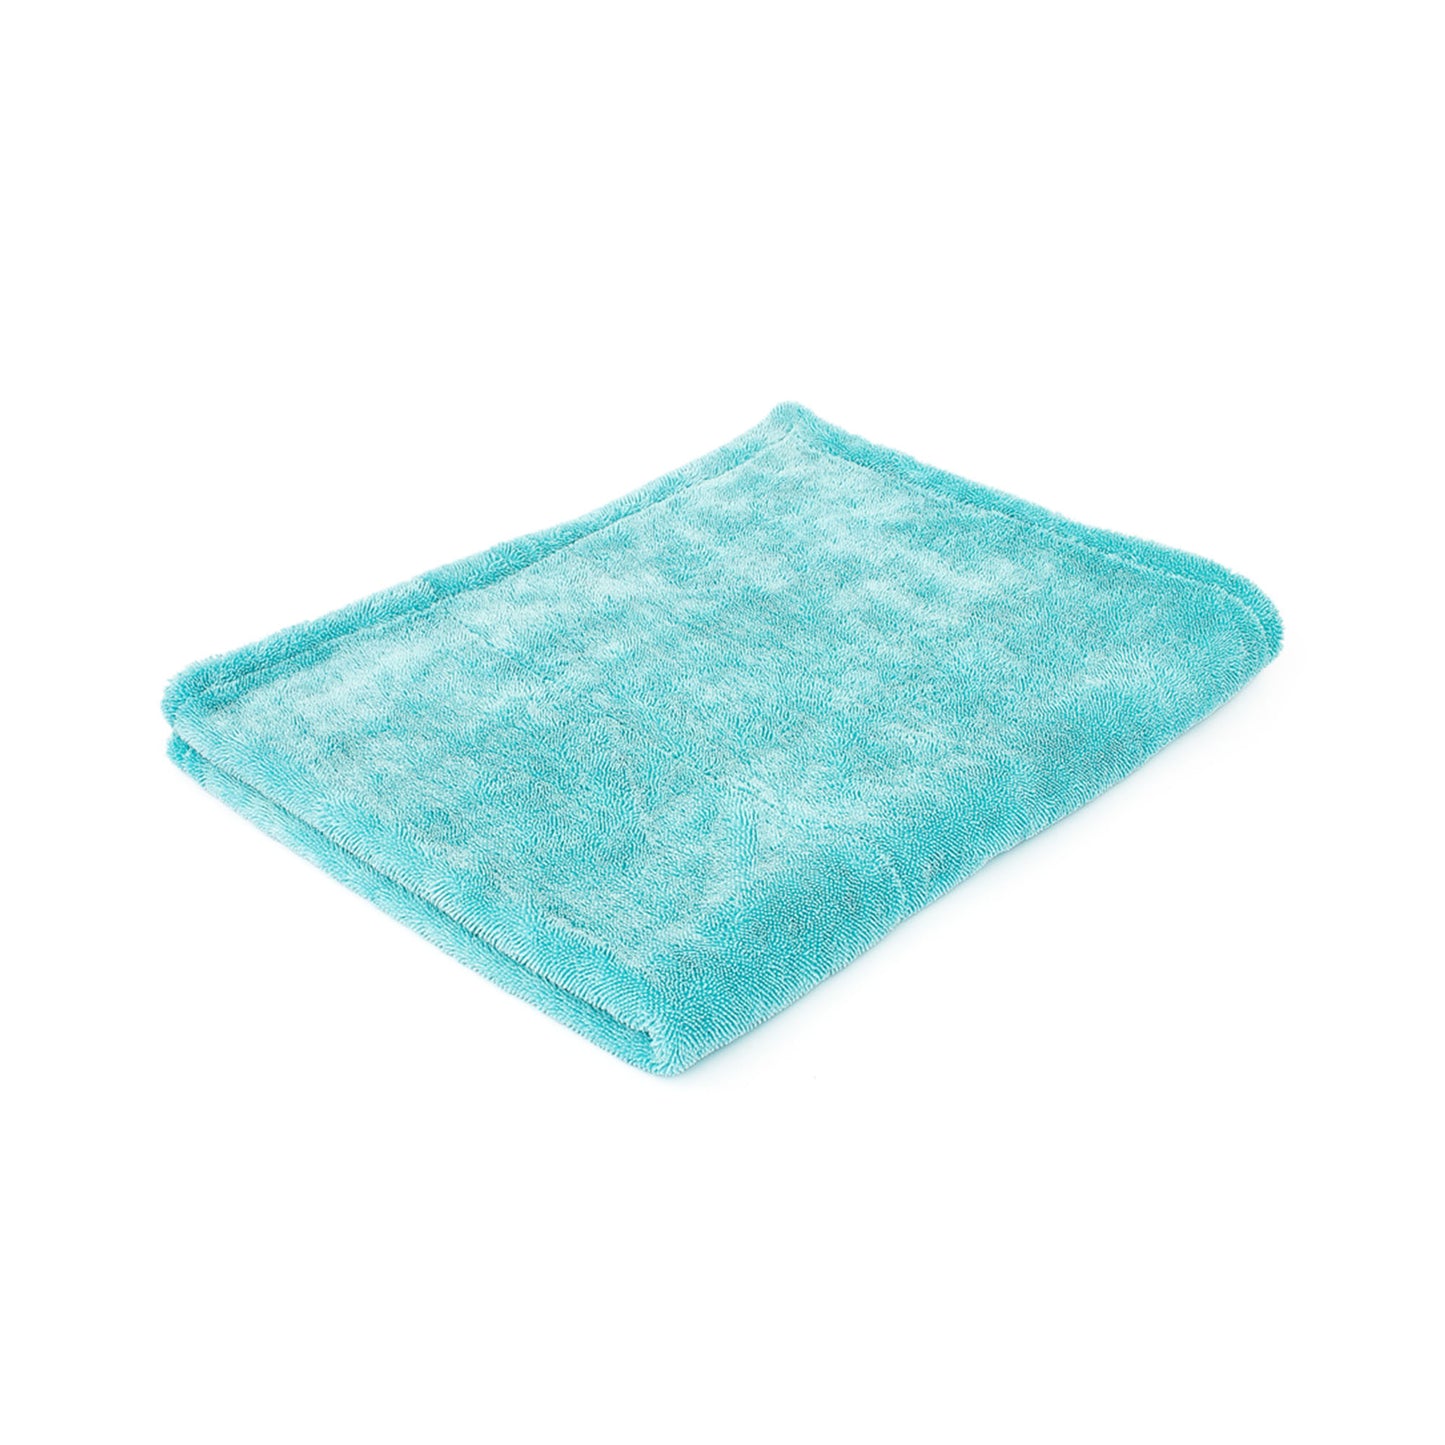 The Rag Company Liquid8r Microfiber Drying Towel